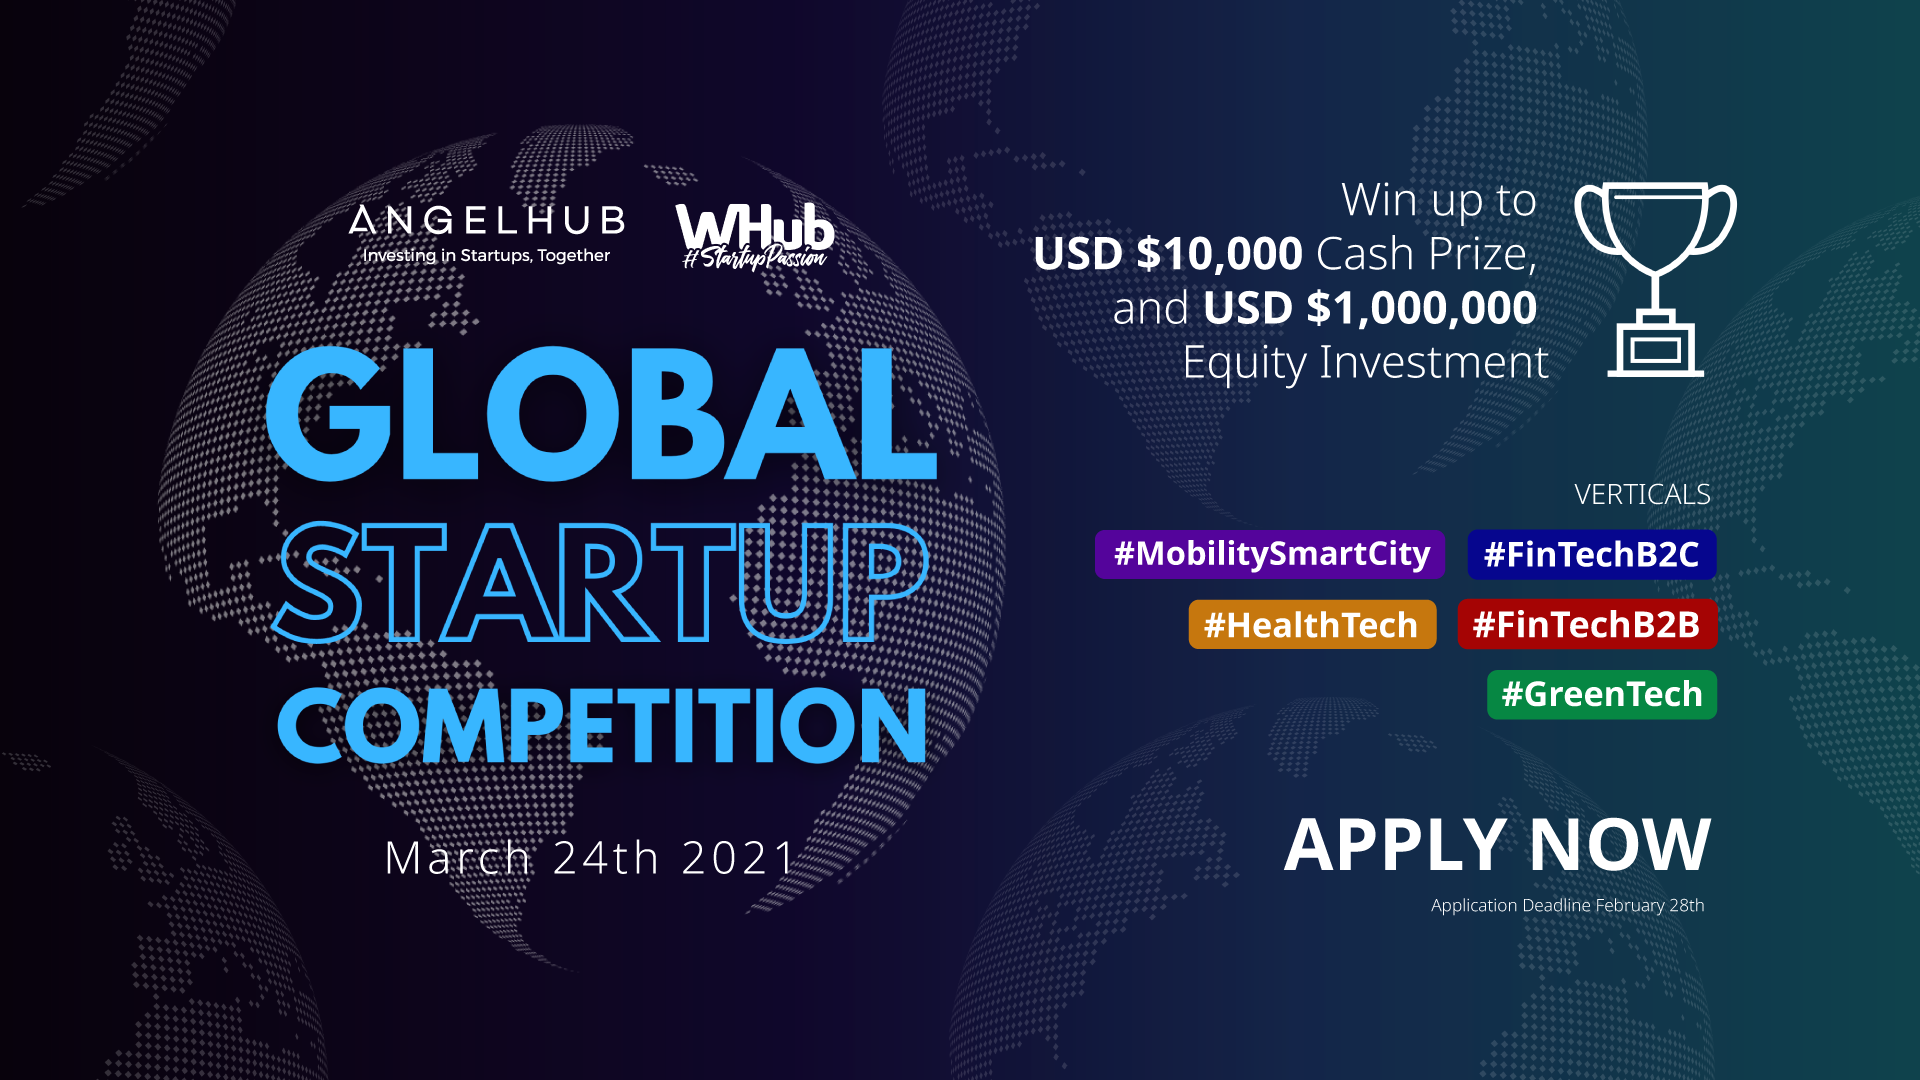 Global Startup Competition 2021 by AngelHub and WHub 세상을 바라보는 열린